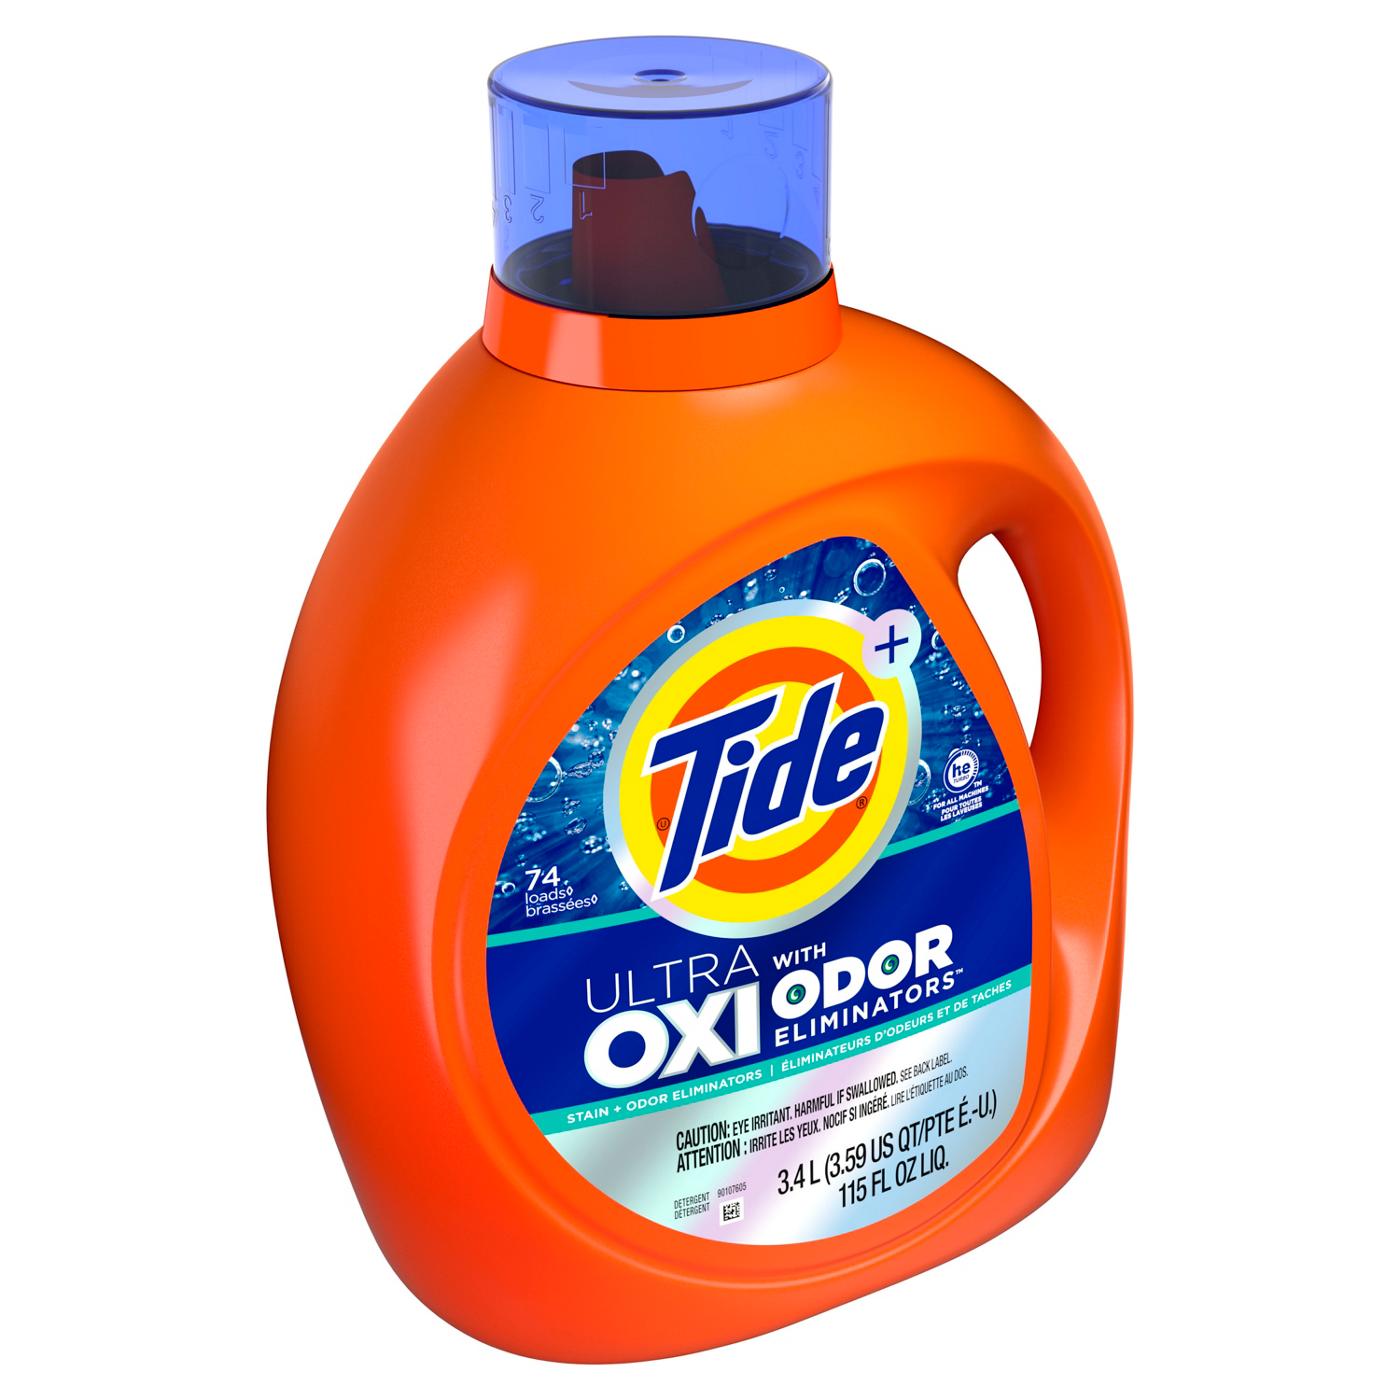 Tide + Ultra Oxi Odor Eliminators HE Turbo Clean Liquid Laundry Detergent, 59 Loads; image 8 of 9